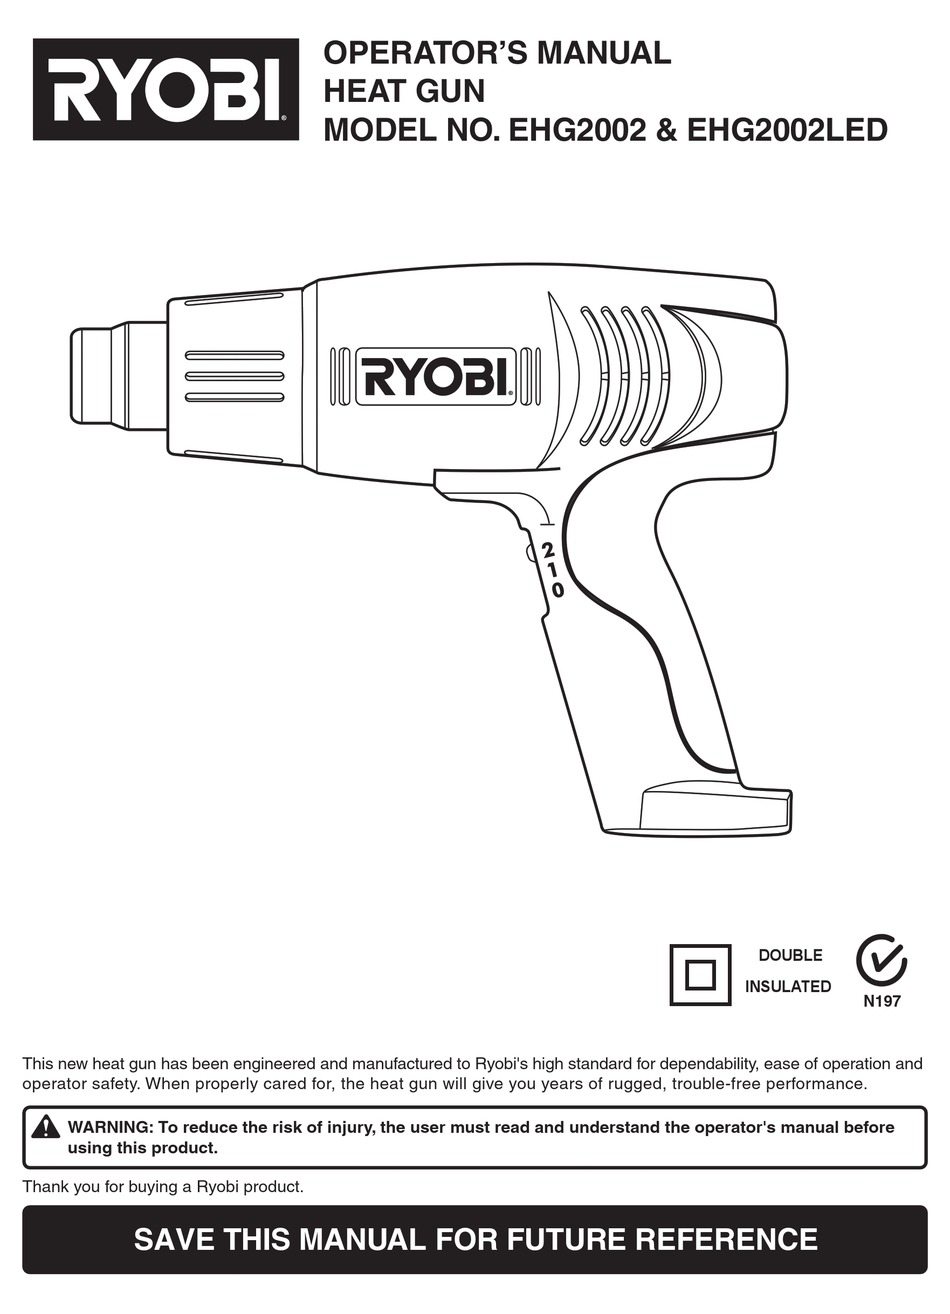 RYOBI EHG2002 OPERATOR'S MANUAL Pdf Download | ManualsLib